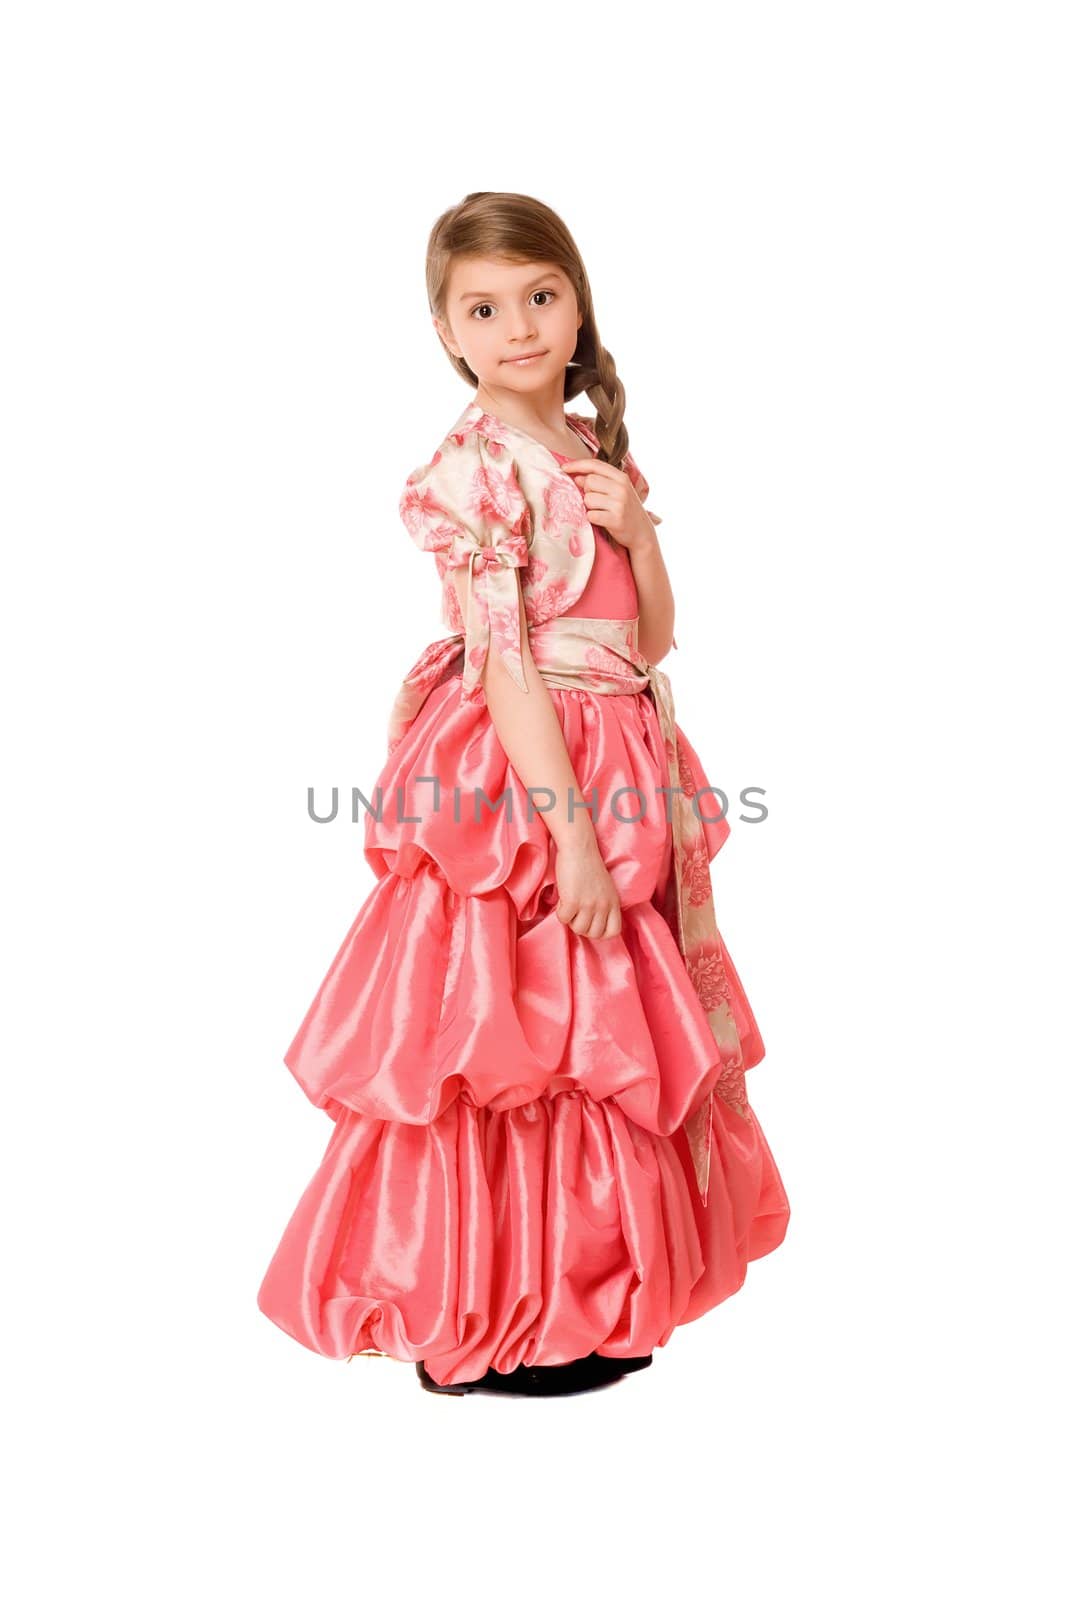 Lovely little girl in a long dress. Isolated